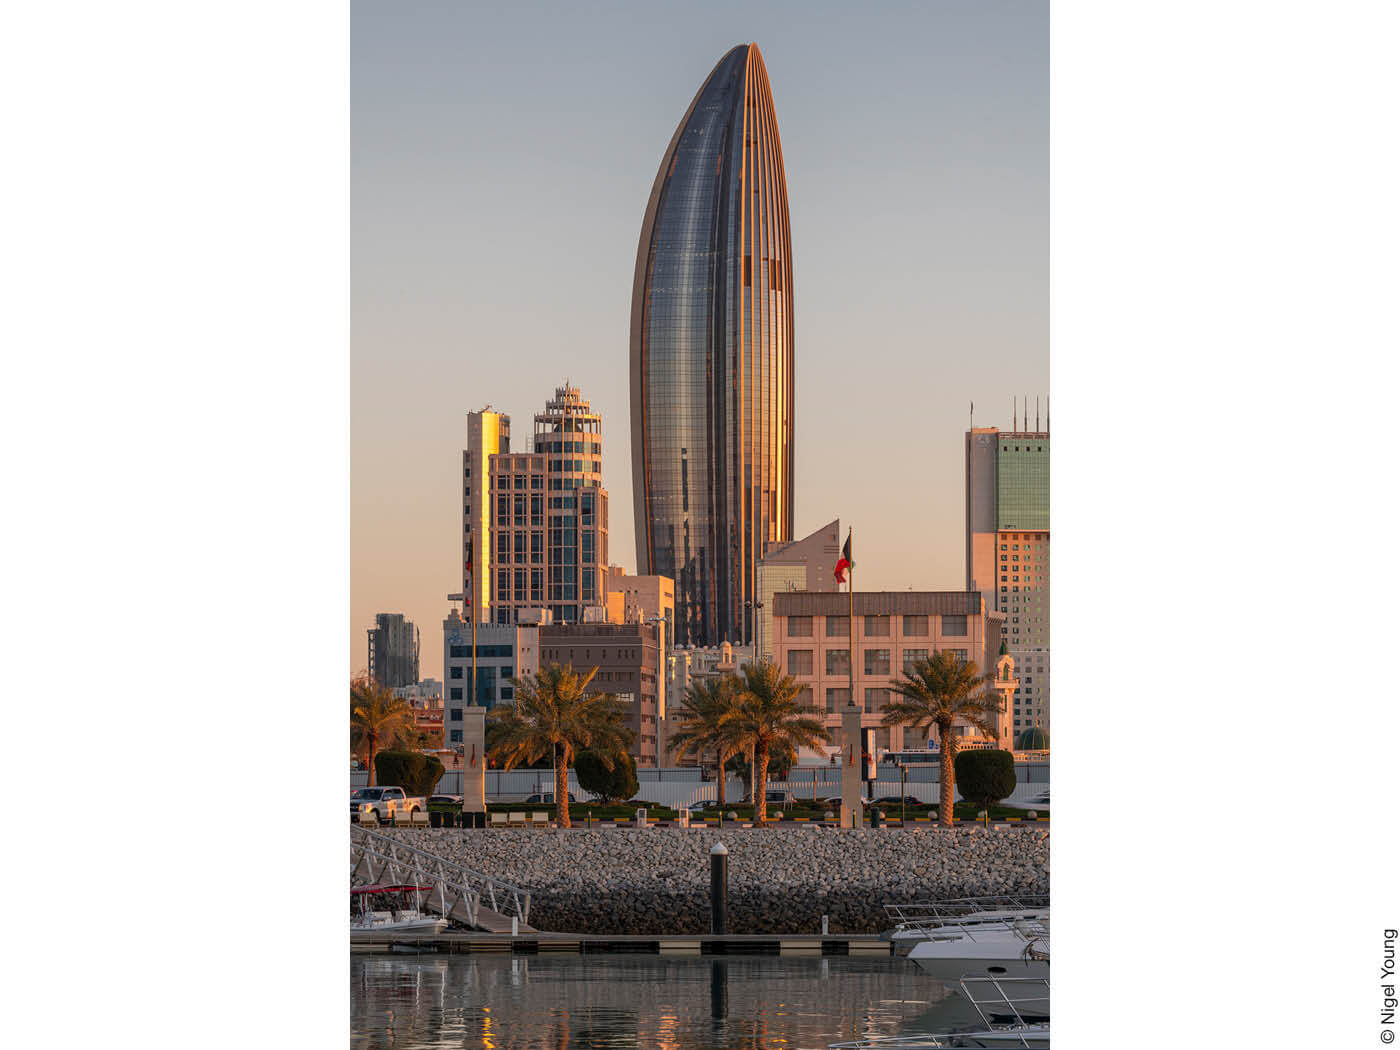 National Bank of Kuwait – NBK Tower